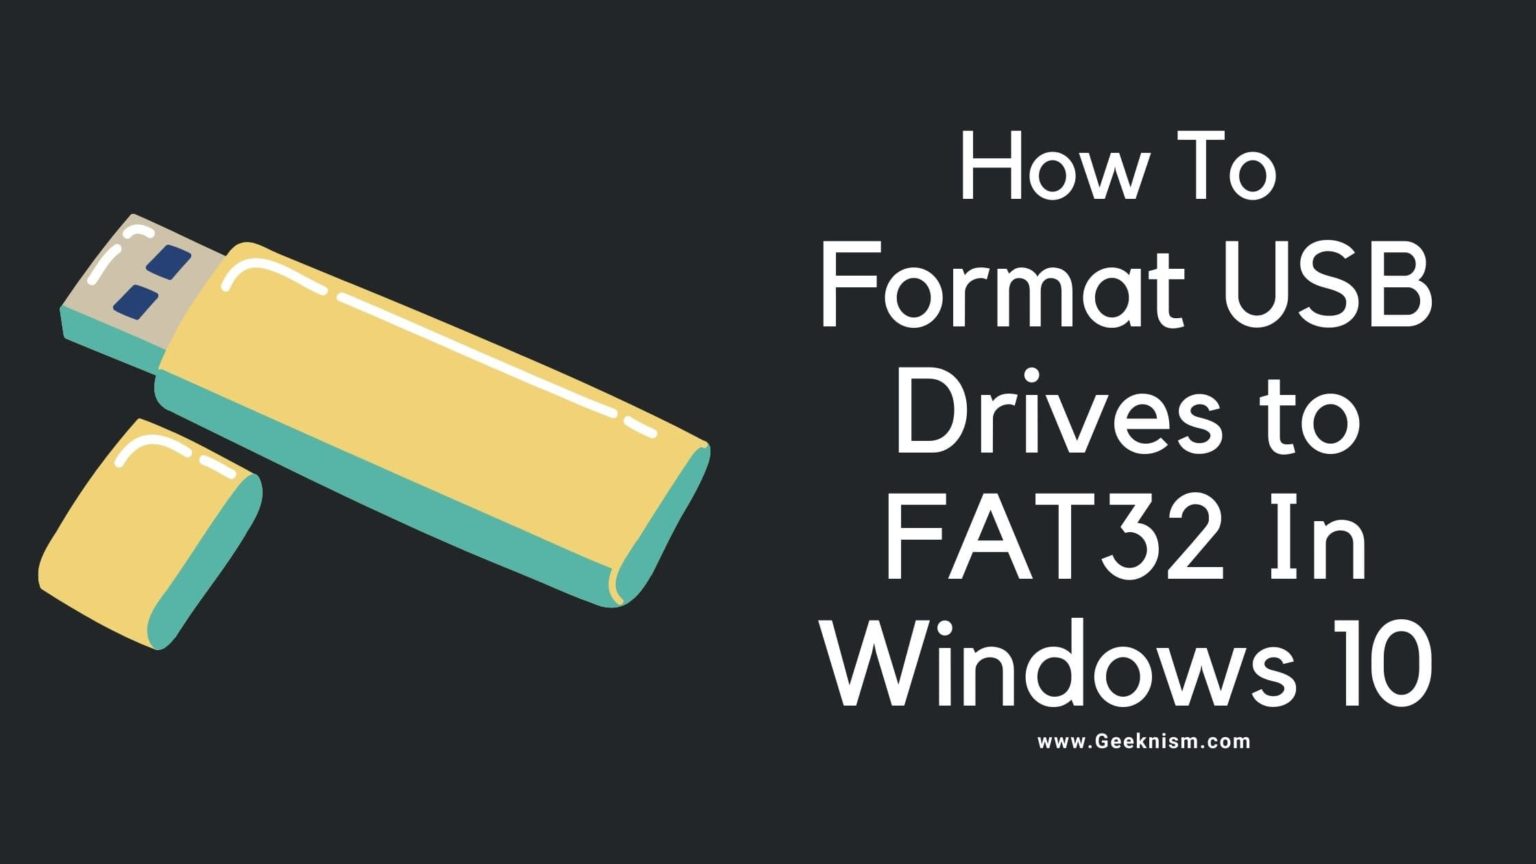 can windows 10 format fat32 usb drives